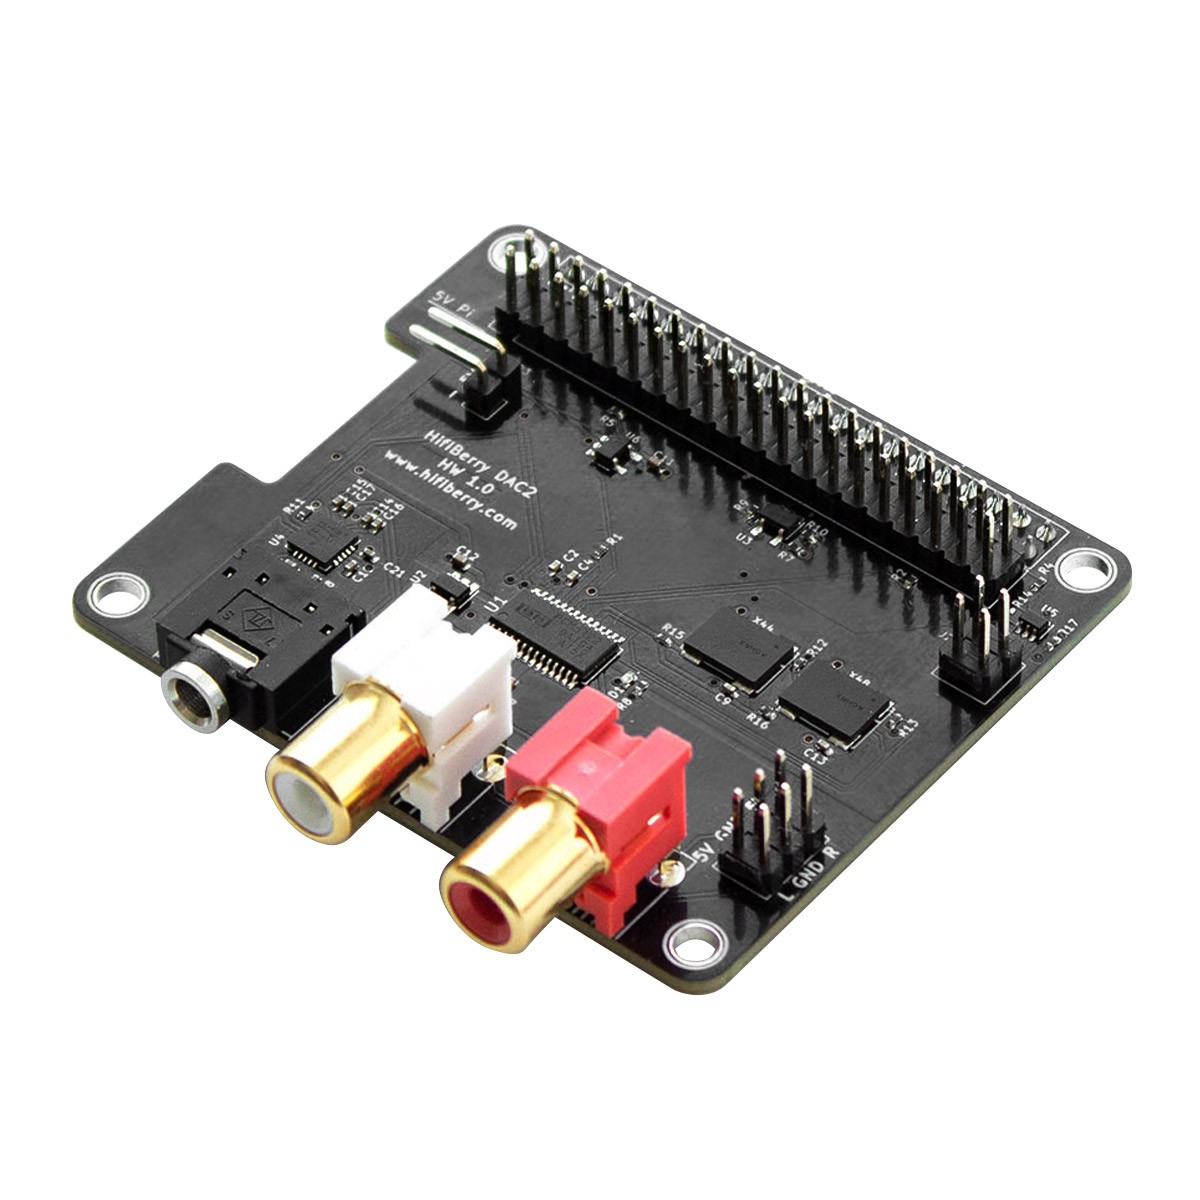 HIFI DAC Audio Sound Card Module I2S interface fr Raspberry Pi 2 B PCM5122 